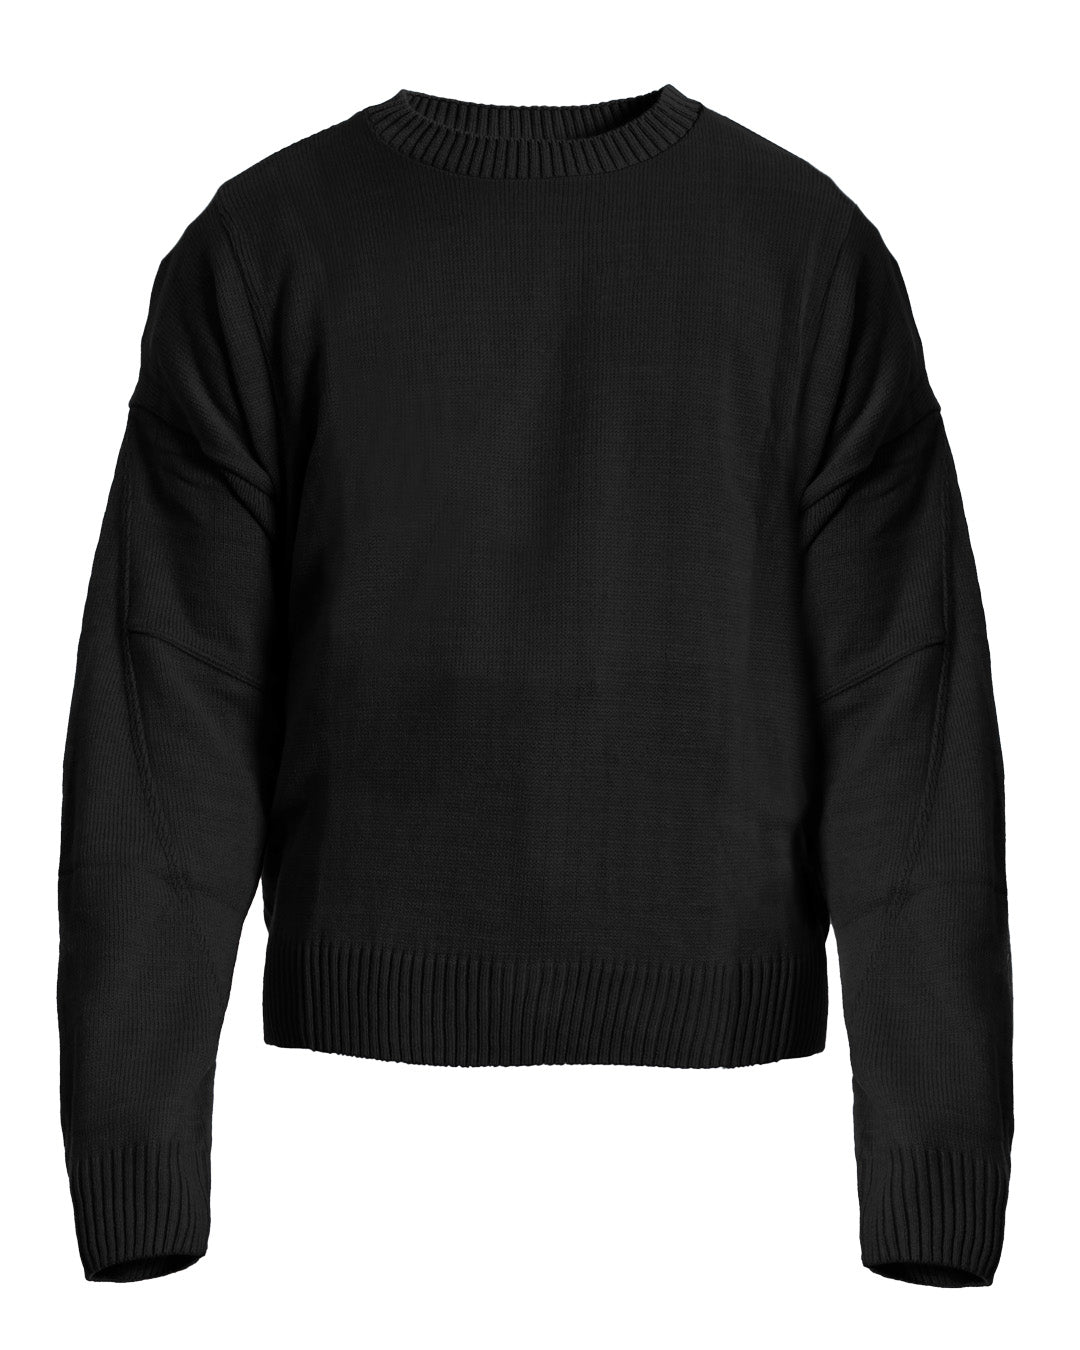 Black Vestweater